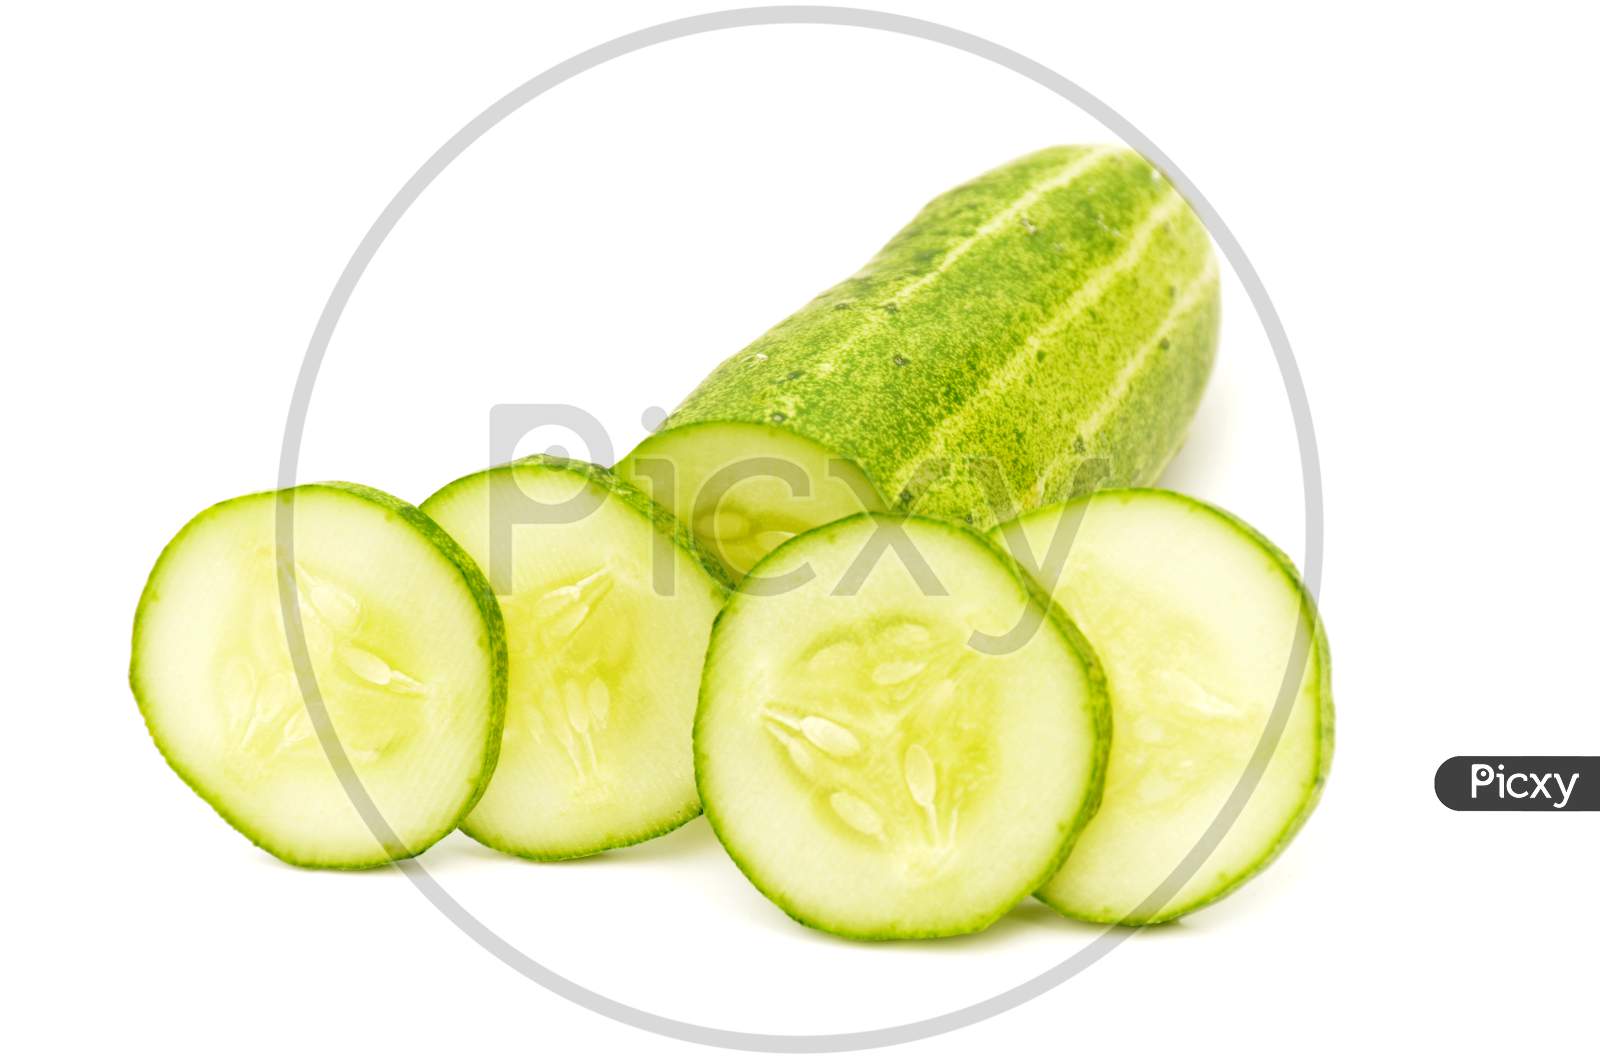 ripe cucumber sliced on white background.